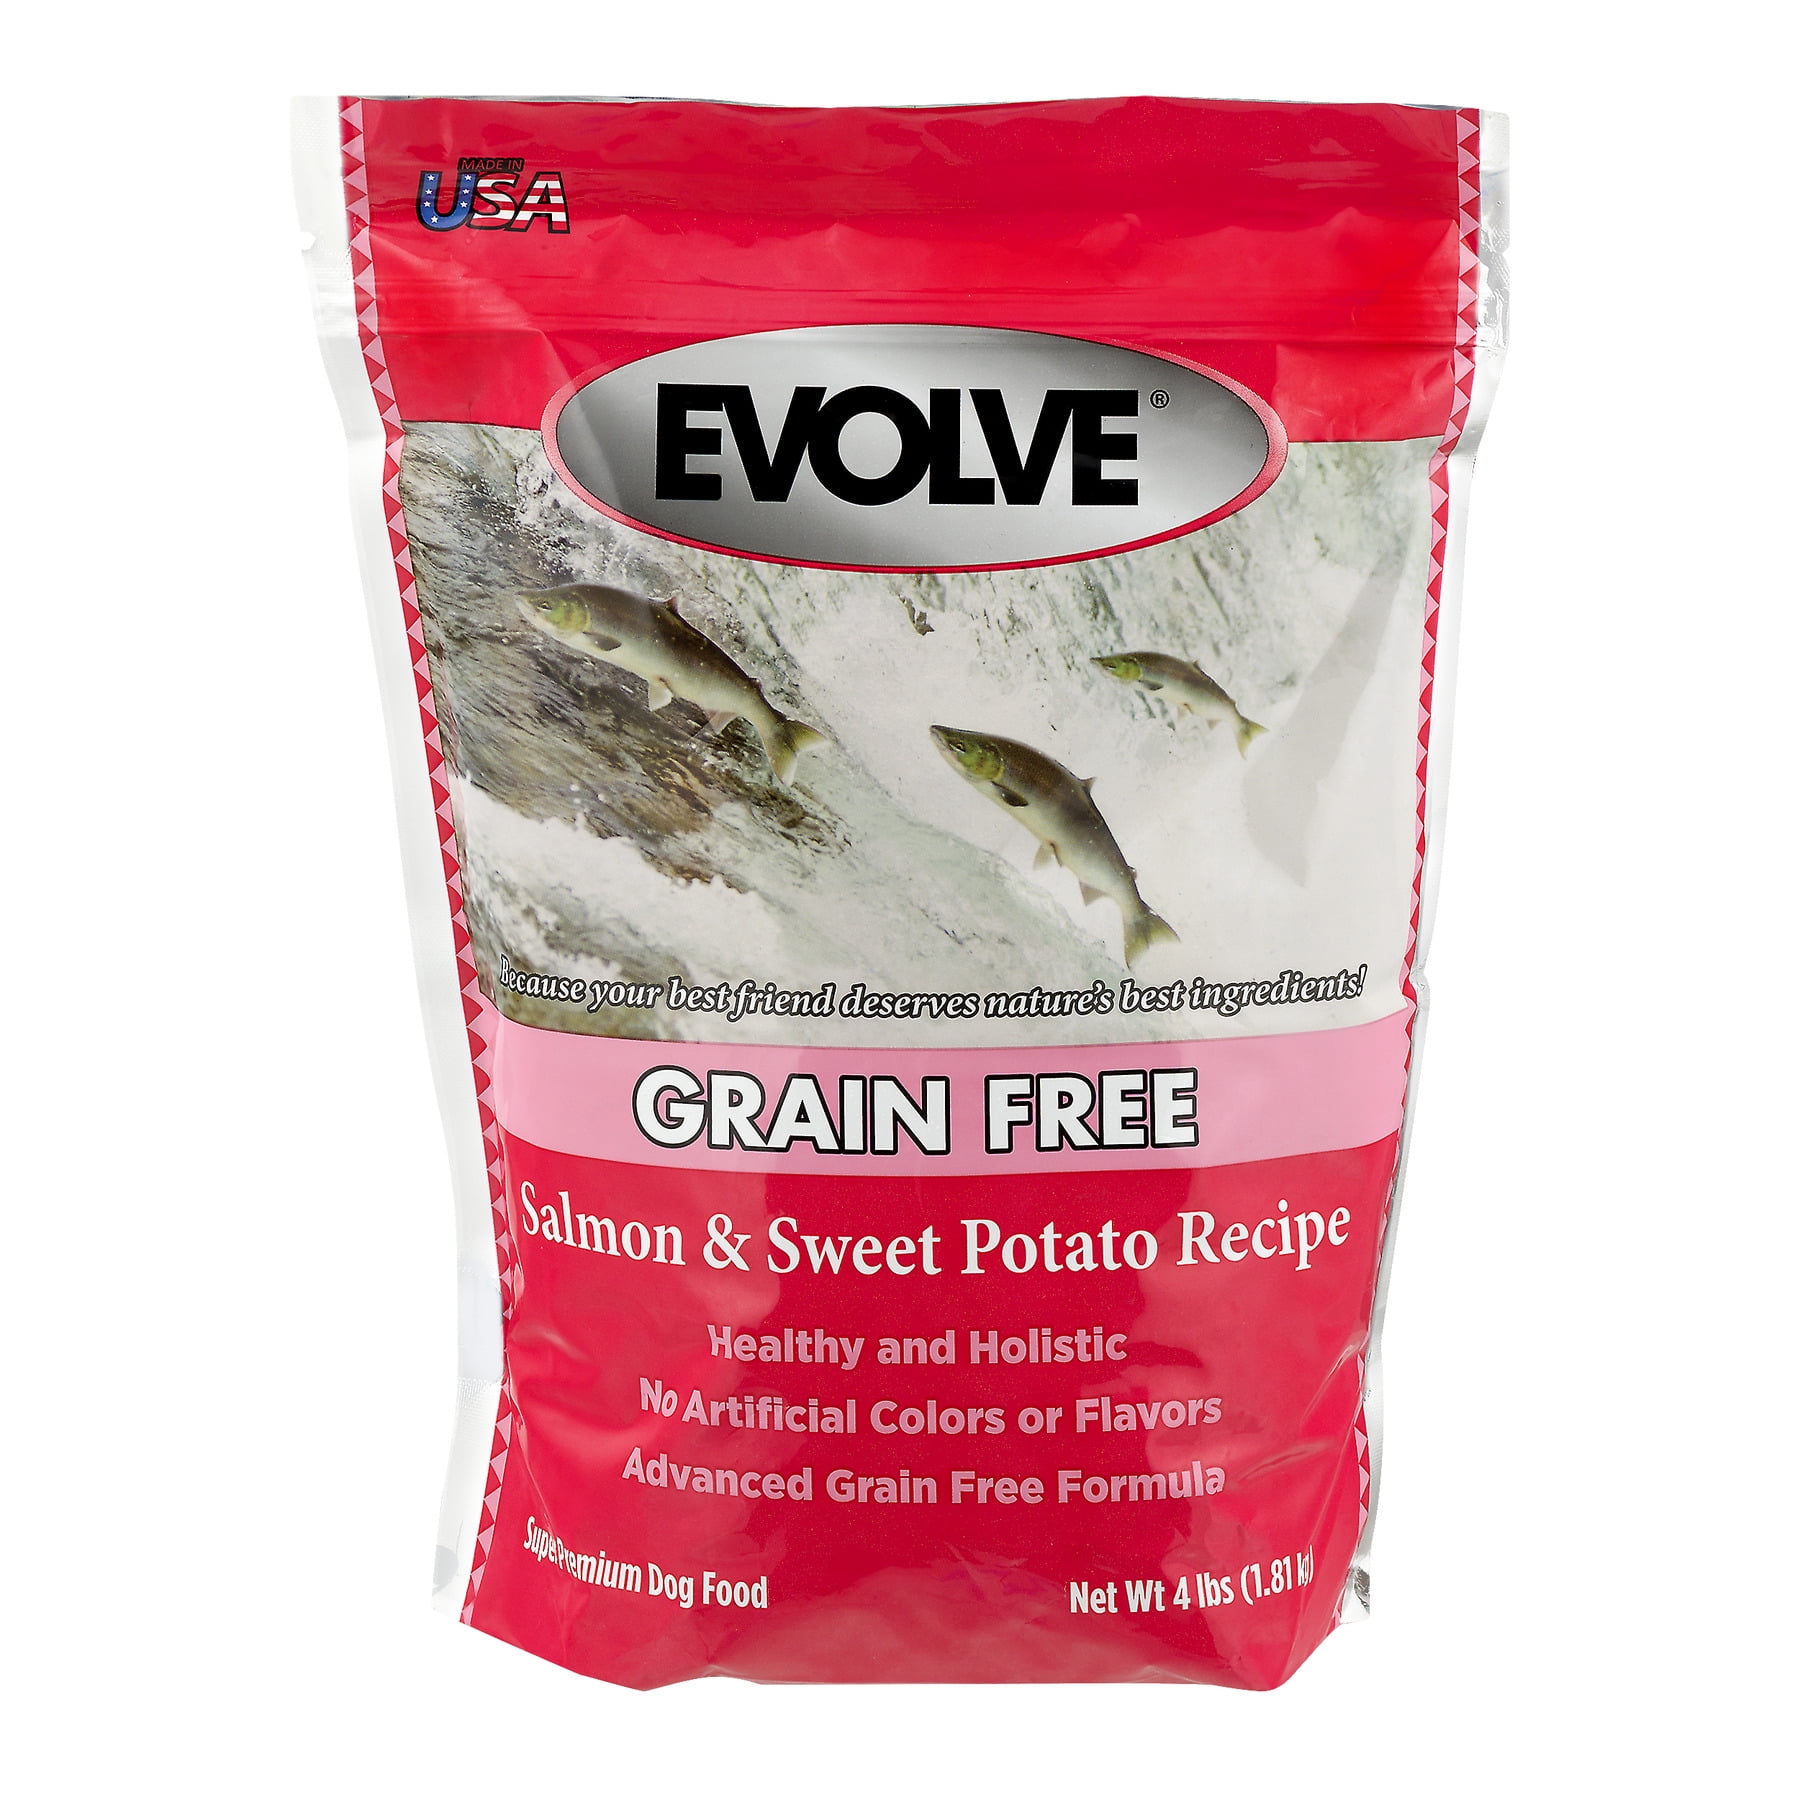 Evolve Grain Free Dog Food Salmon & Sweet Potato Recipe, 4.0 LB